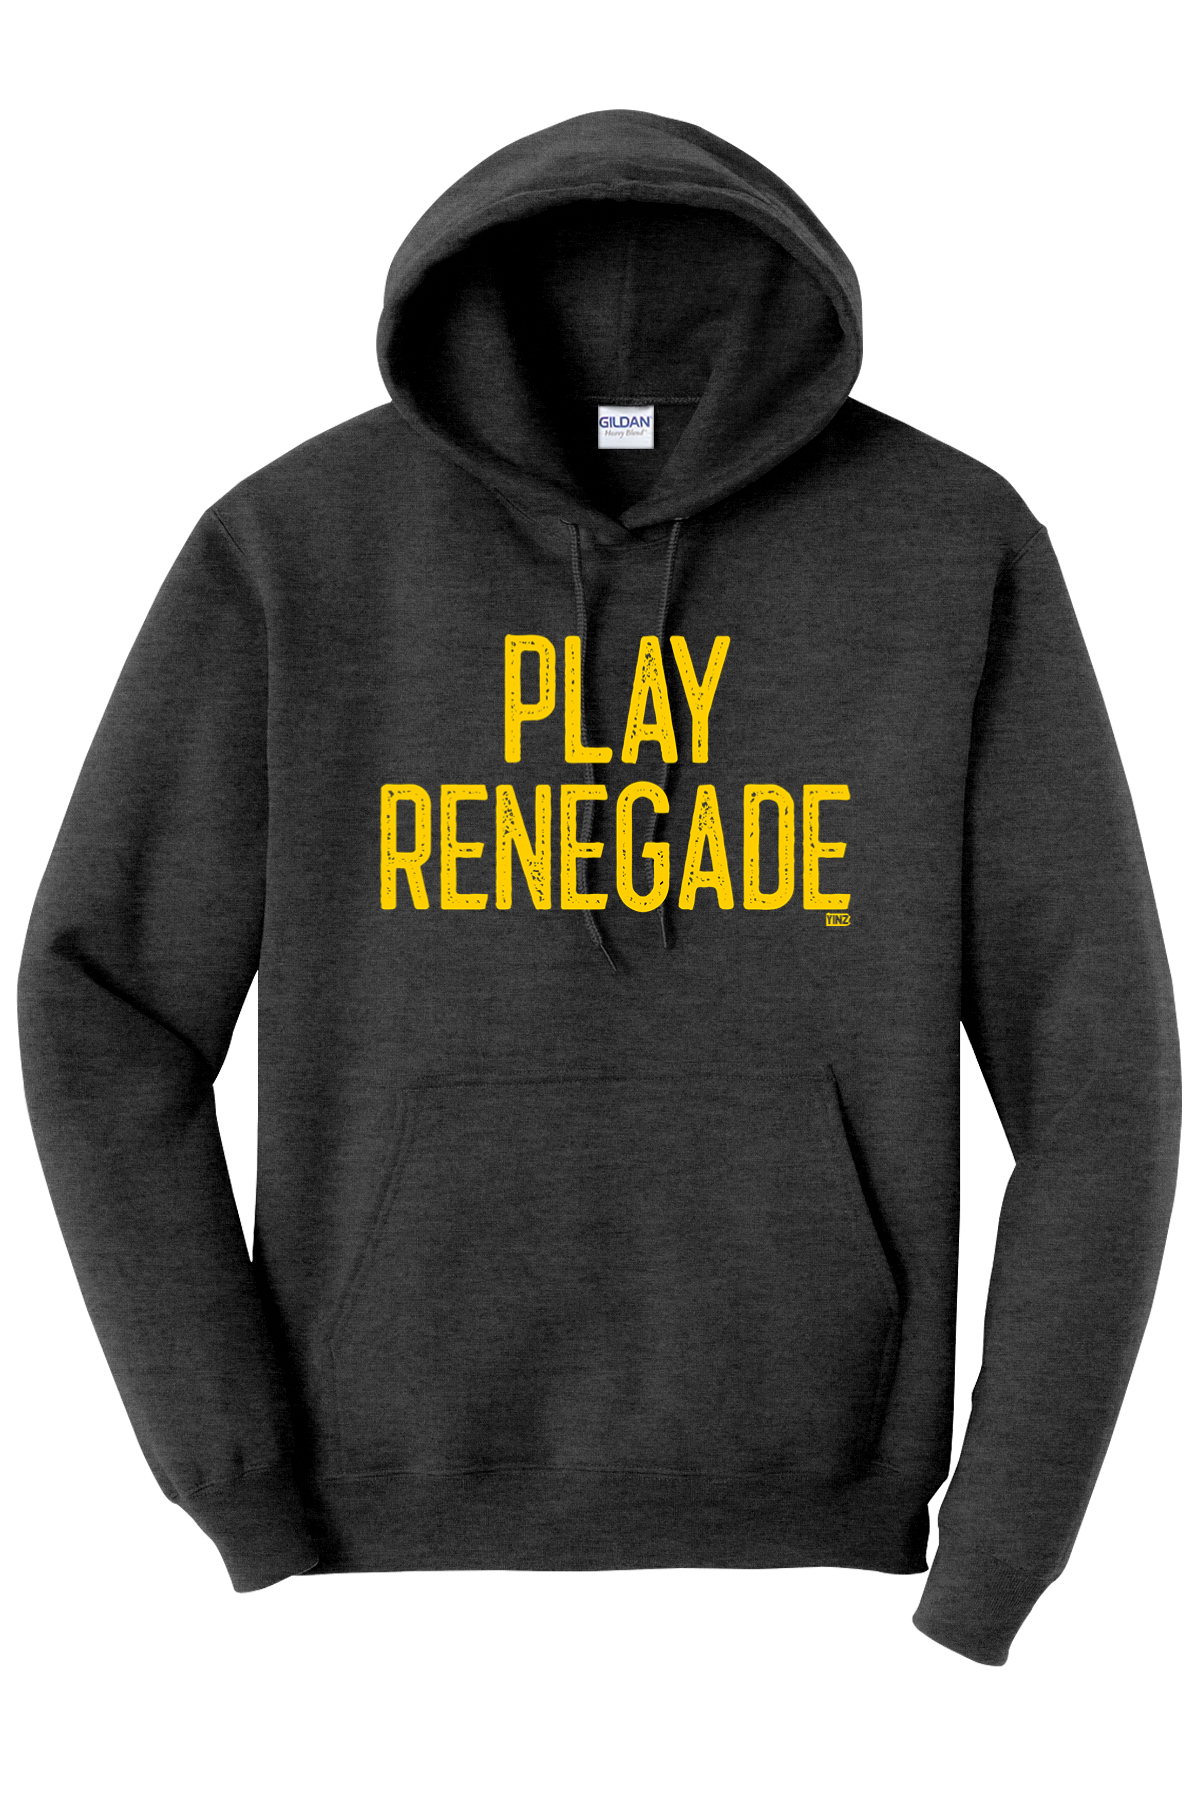 Play Renegade - Hoodie - Yinzylvania